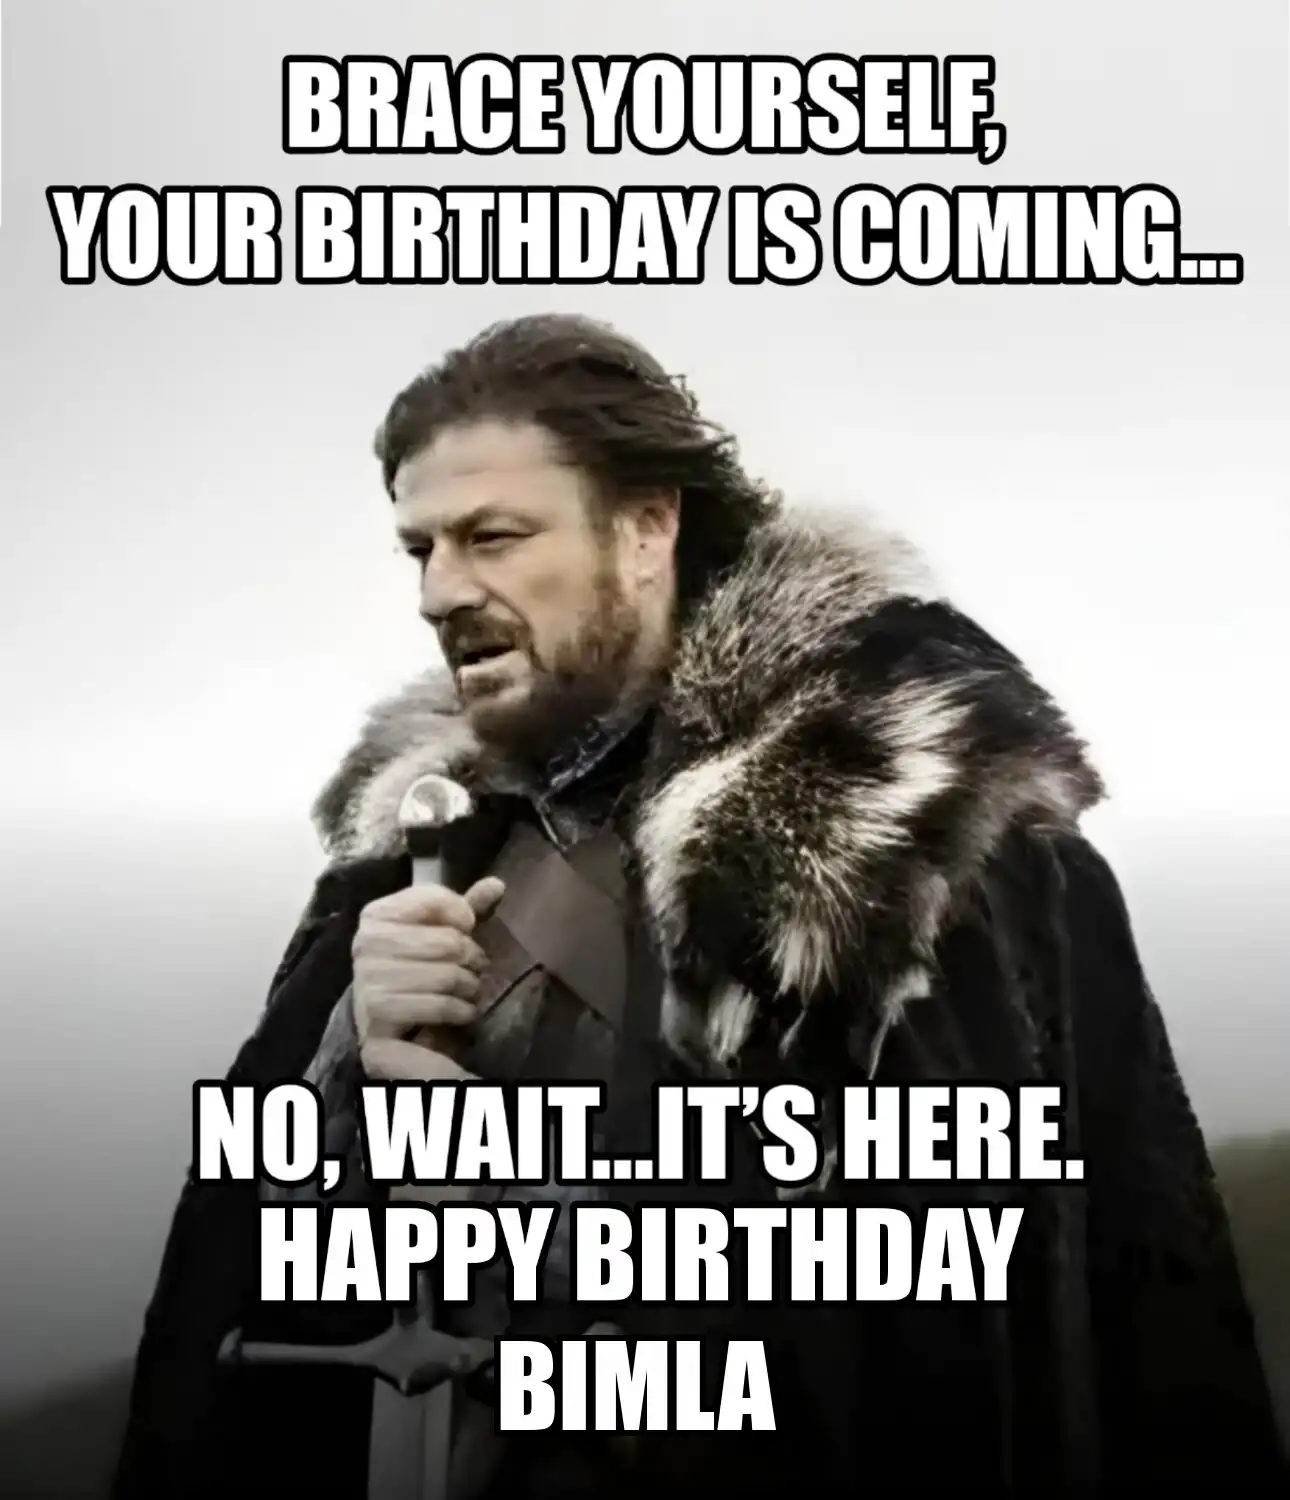 Happy Birthday Bimla Brace Yourself Your Birthday Is Coming Meme